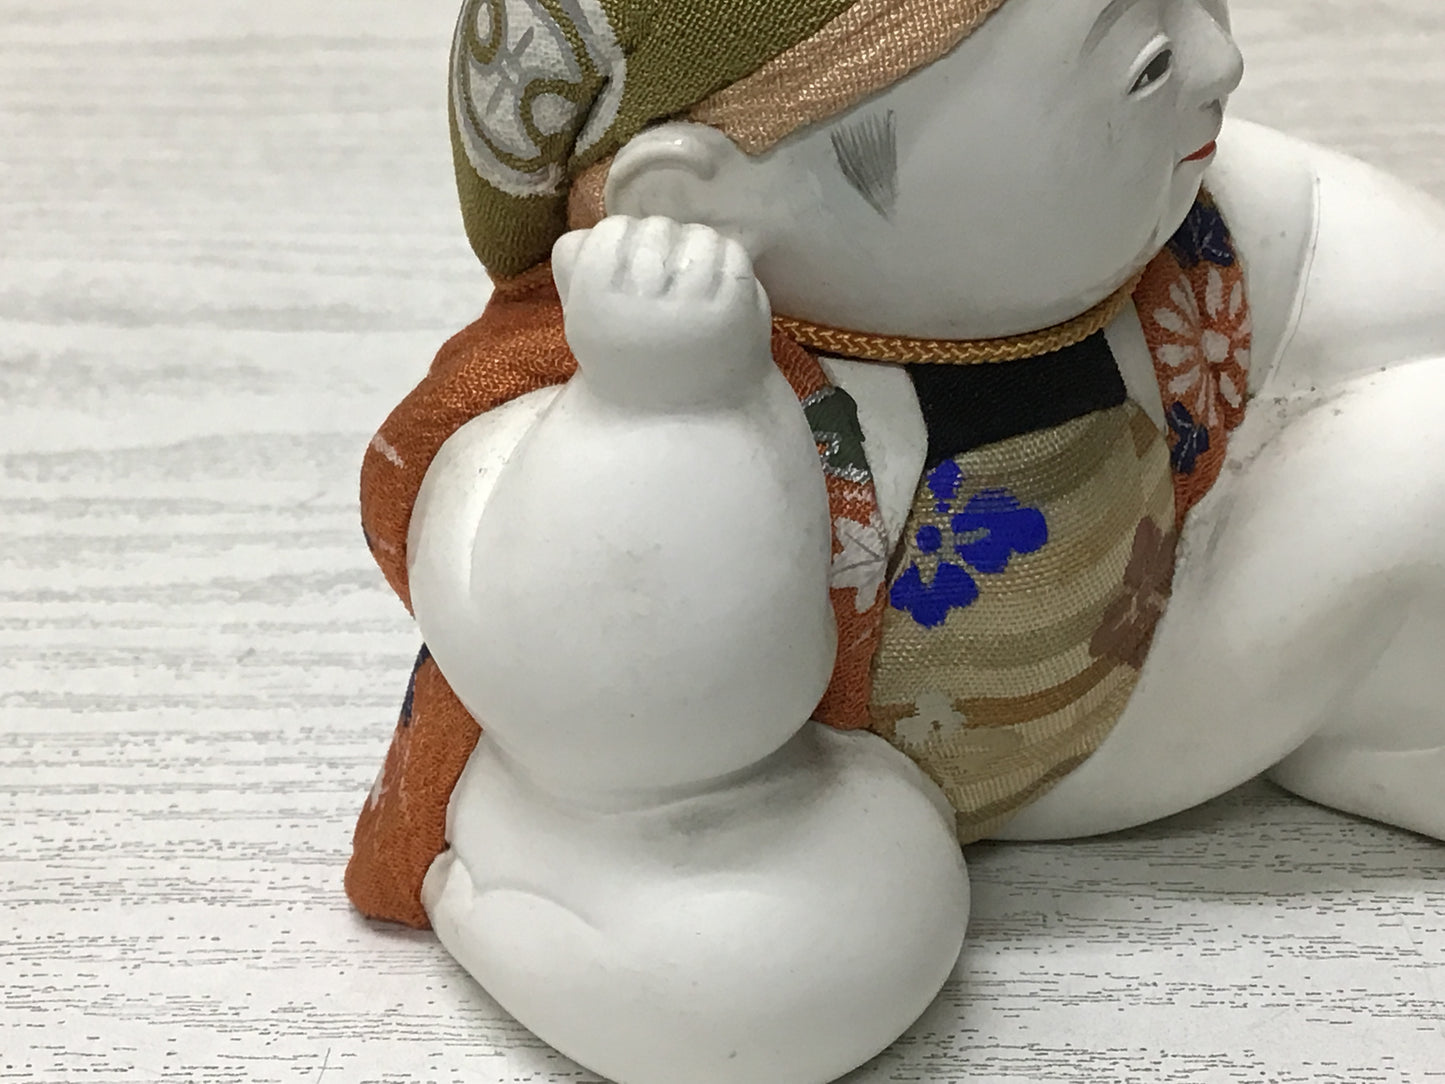 Y2817 NINGYO Kimekomi Gosho doll box Japanese vintage antique figure figurine